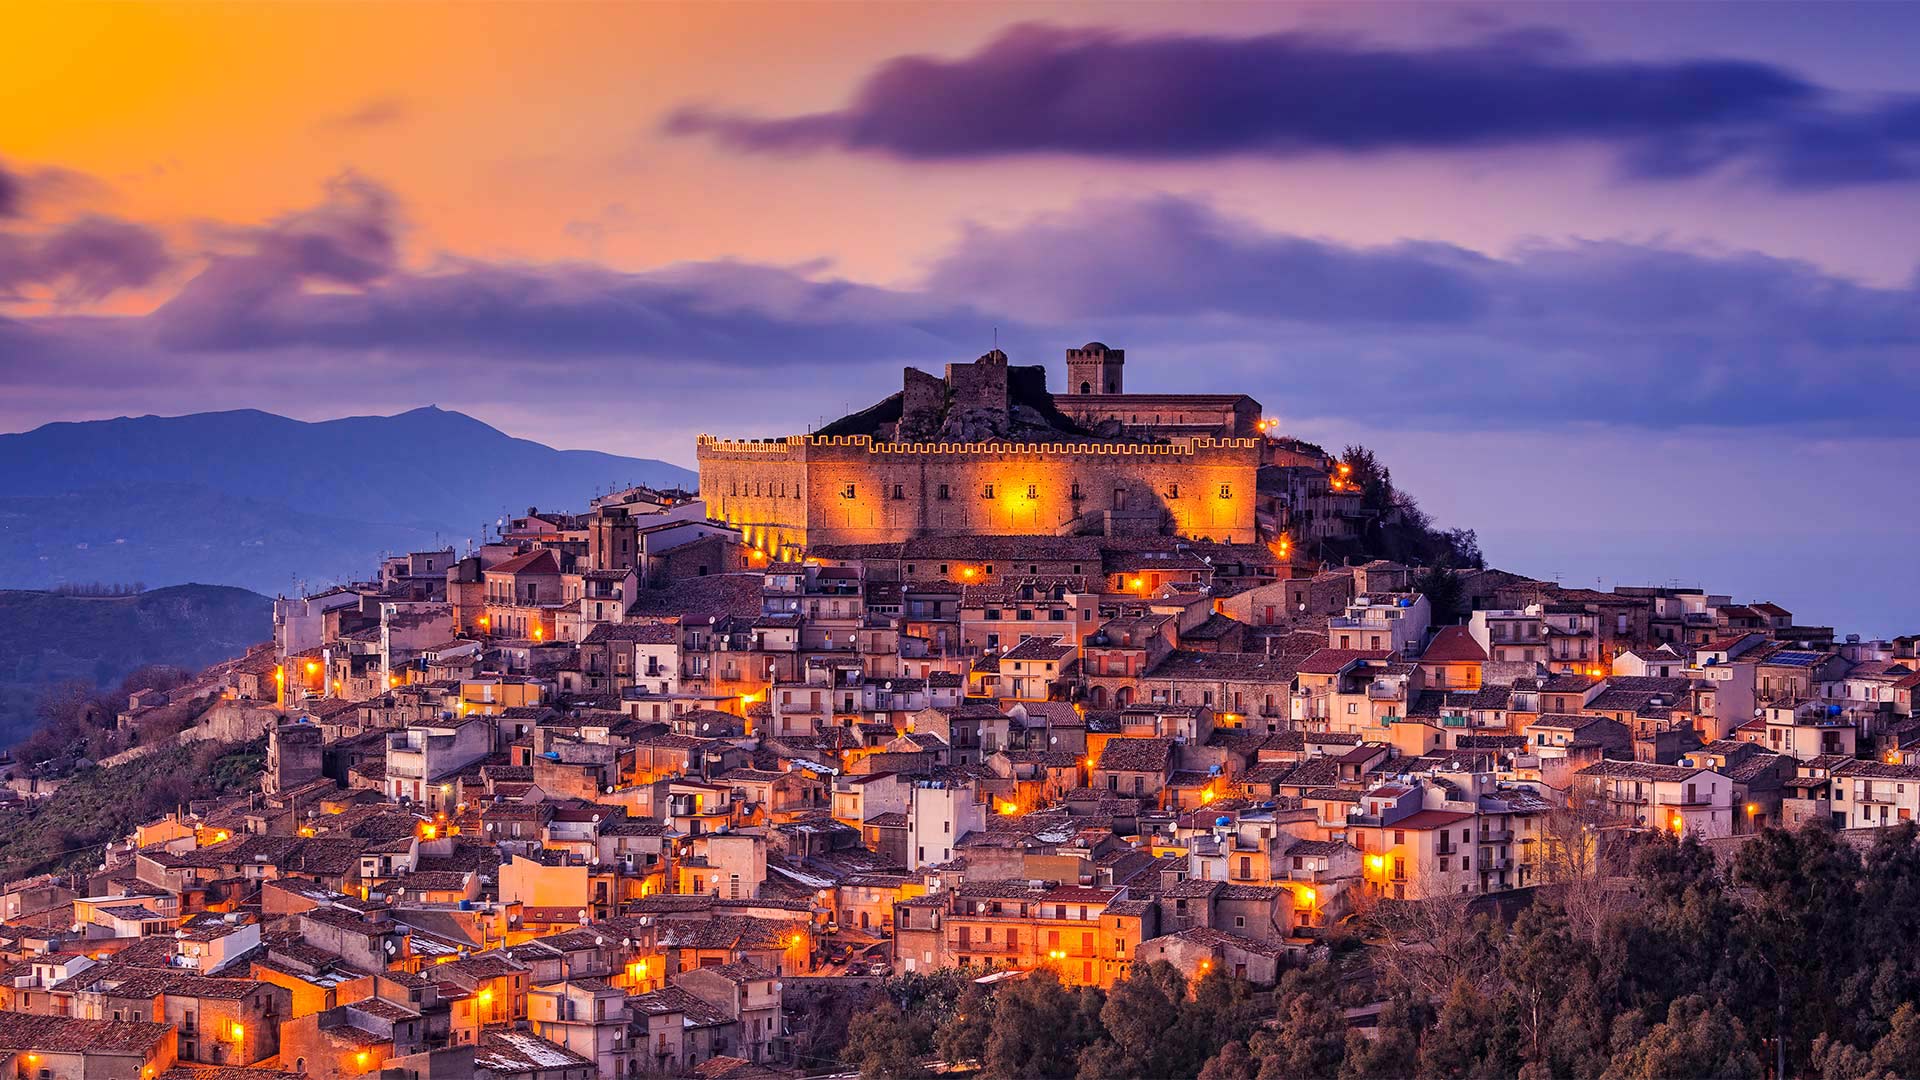 Montalbano Elicona, Messina, Sicily, Italy - Antonino Bartuccio/SOPA Collection/Offset by Shutterstock)